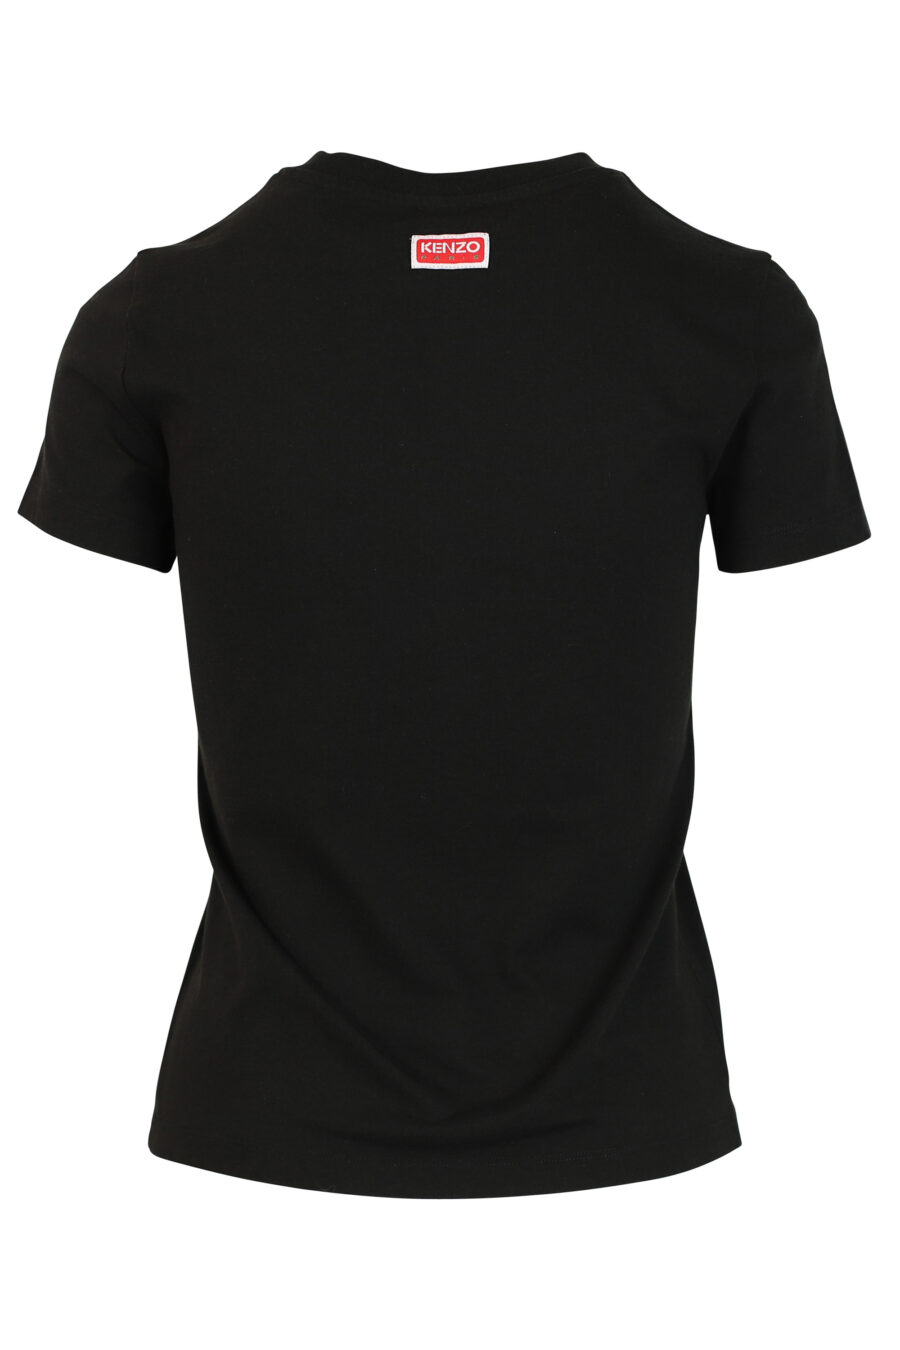 Black t-shirt with tiger maxilogo - 3612230460195 2